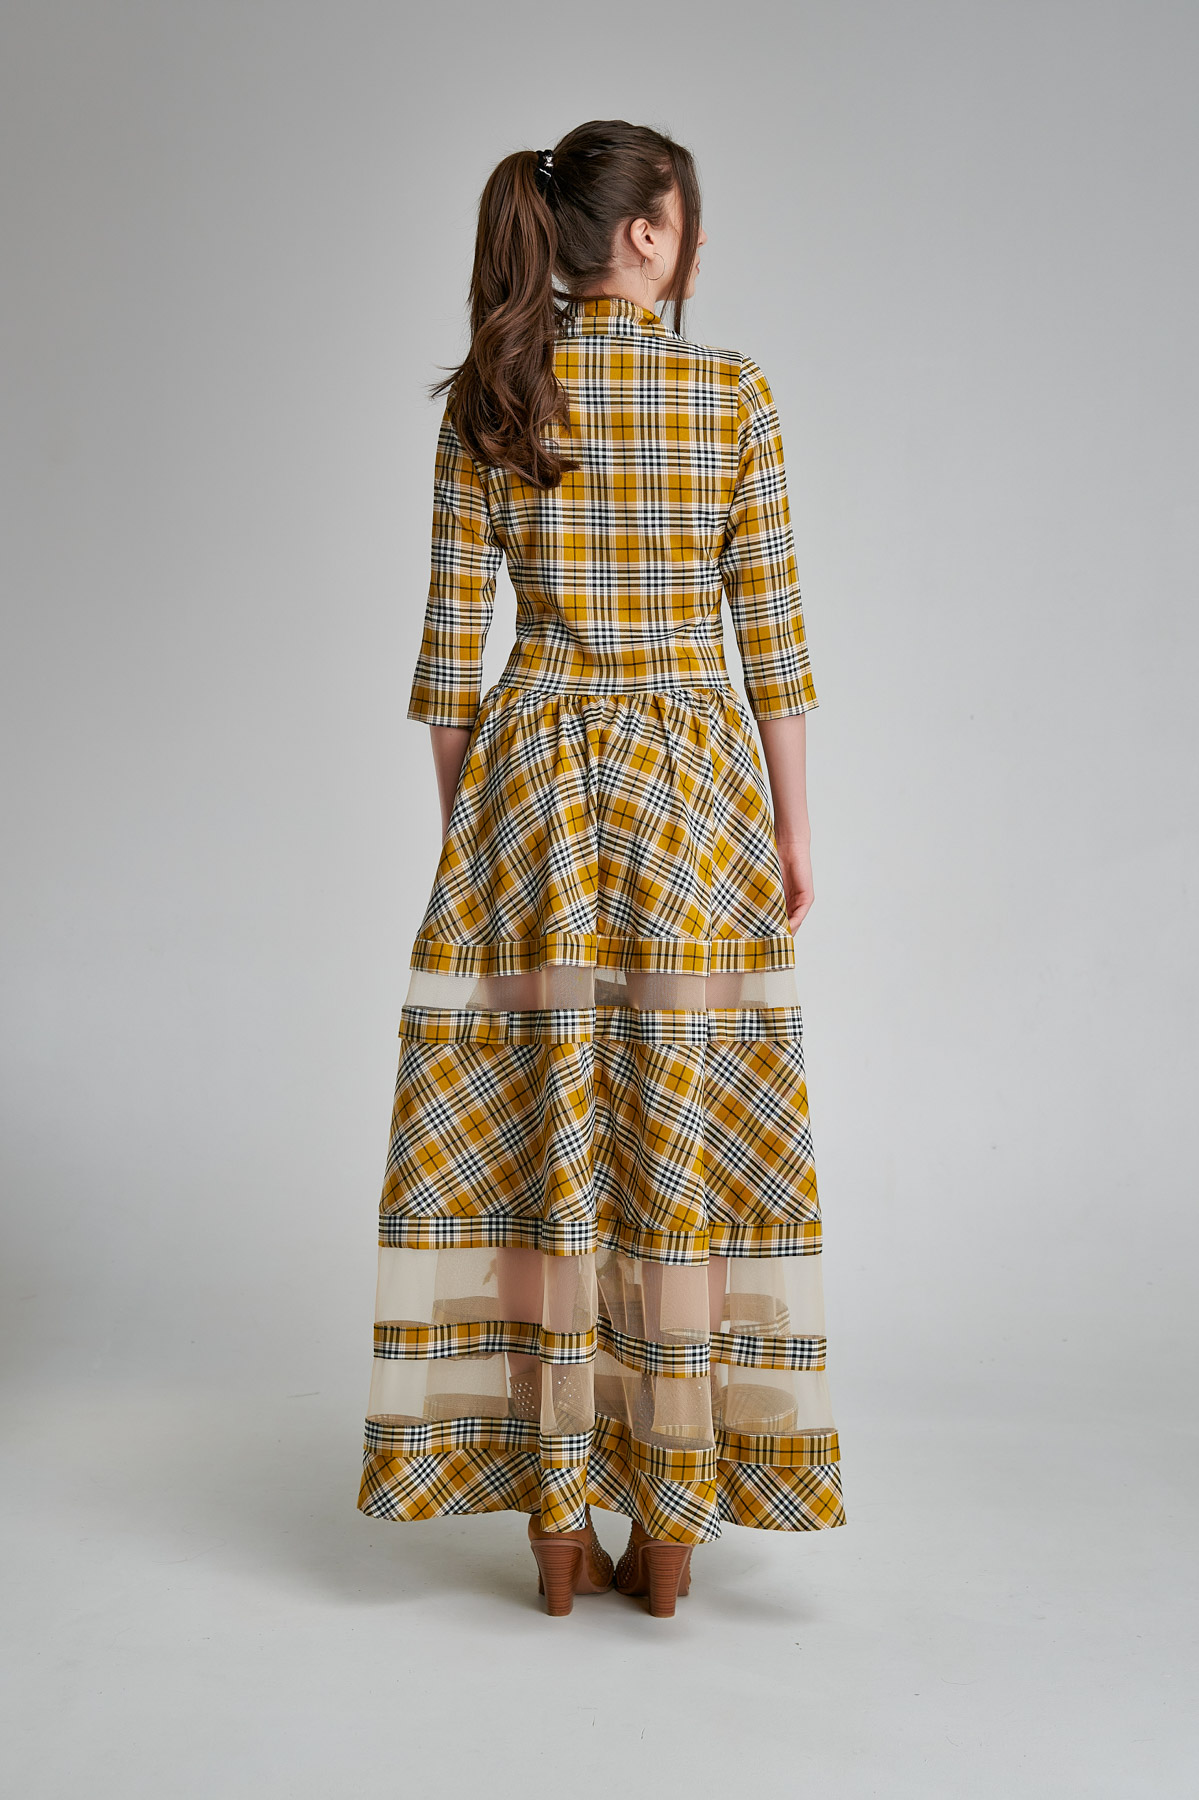 DELLA plaid casual dress with tulle insert. Natural fabrics, original design, handmade embroidery